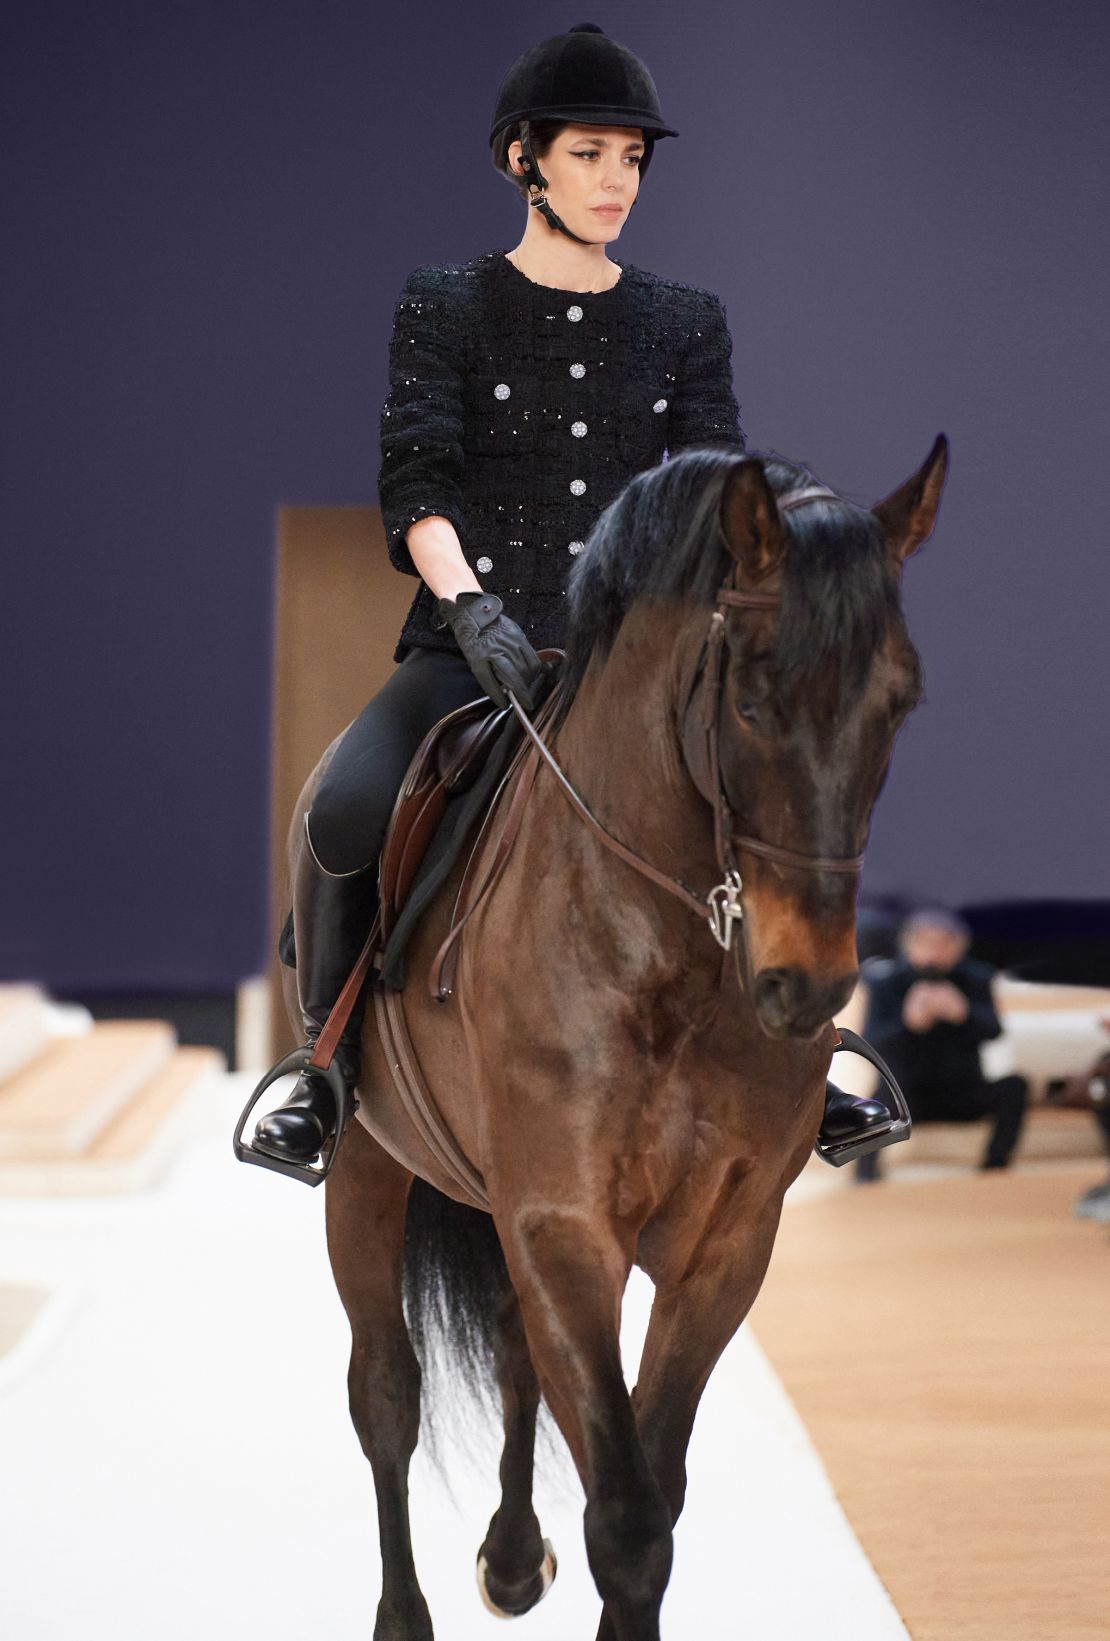 Charlotte Casiraghi charged down the runway on horseback.